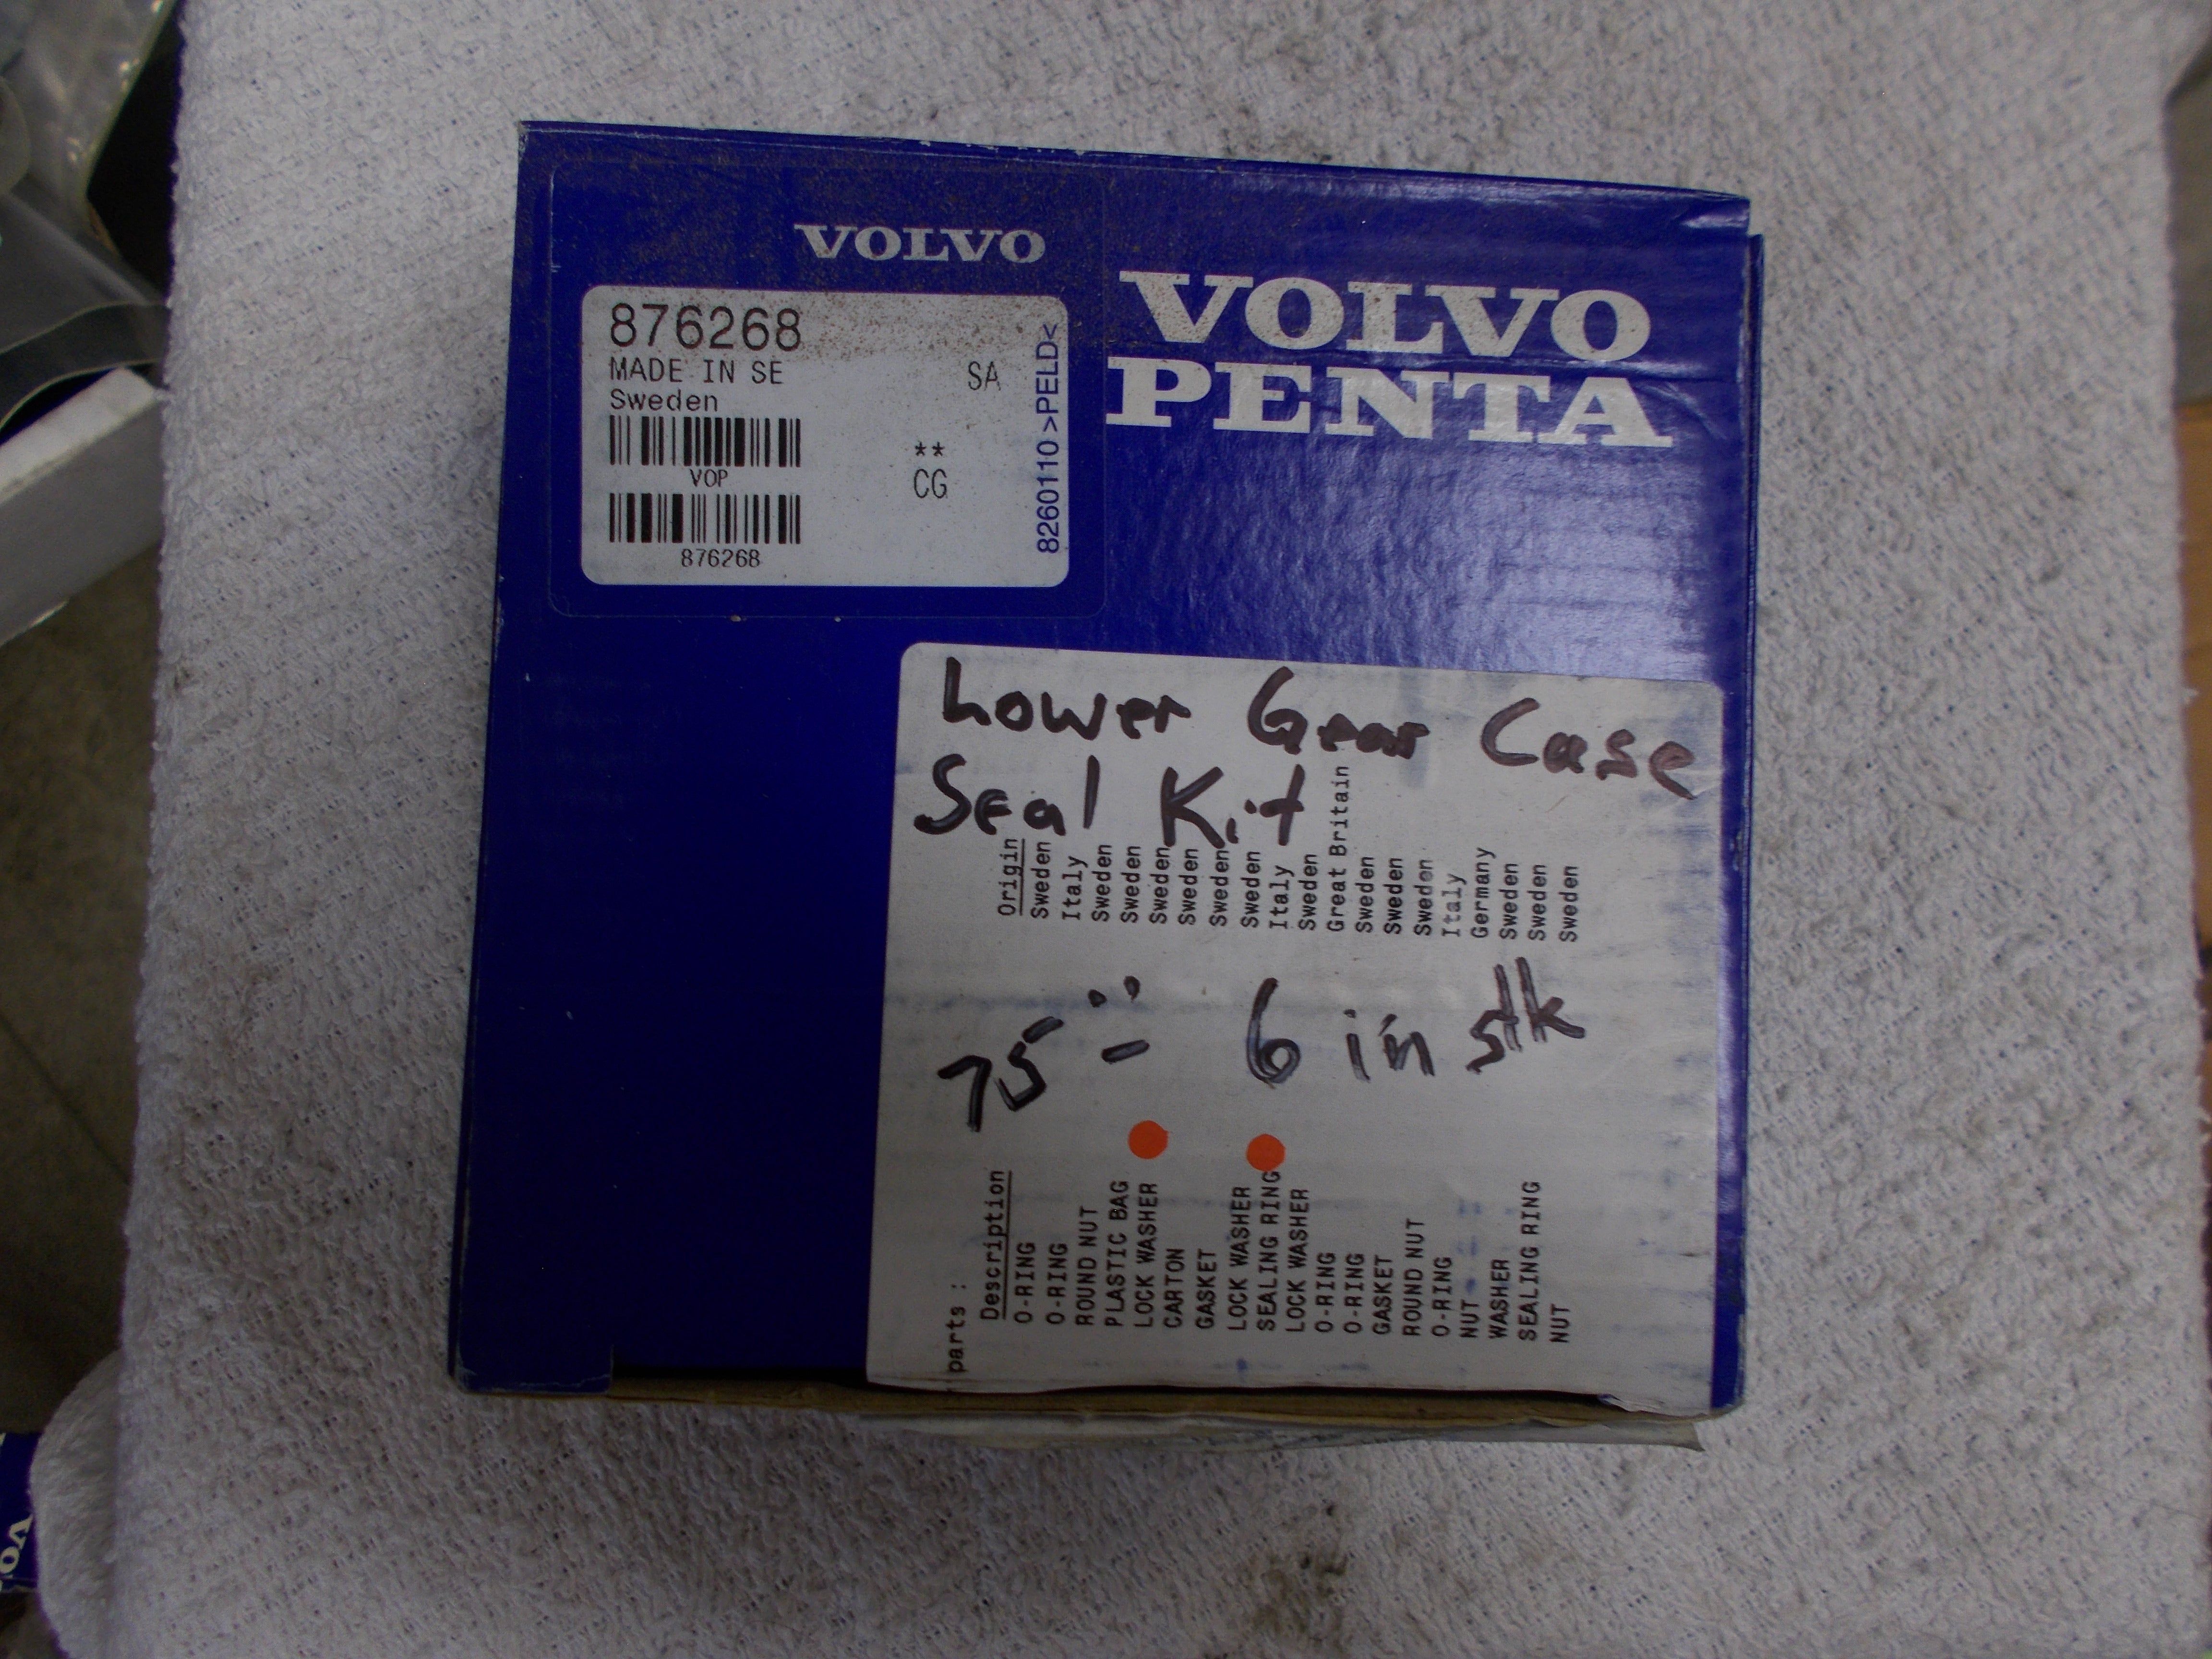 Volvo Penta 876268 Lower Gear Case Seal Kit 